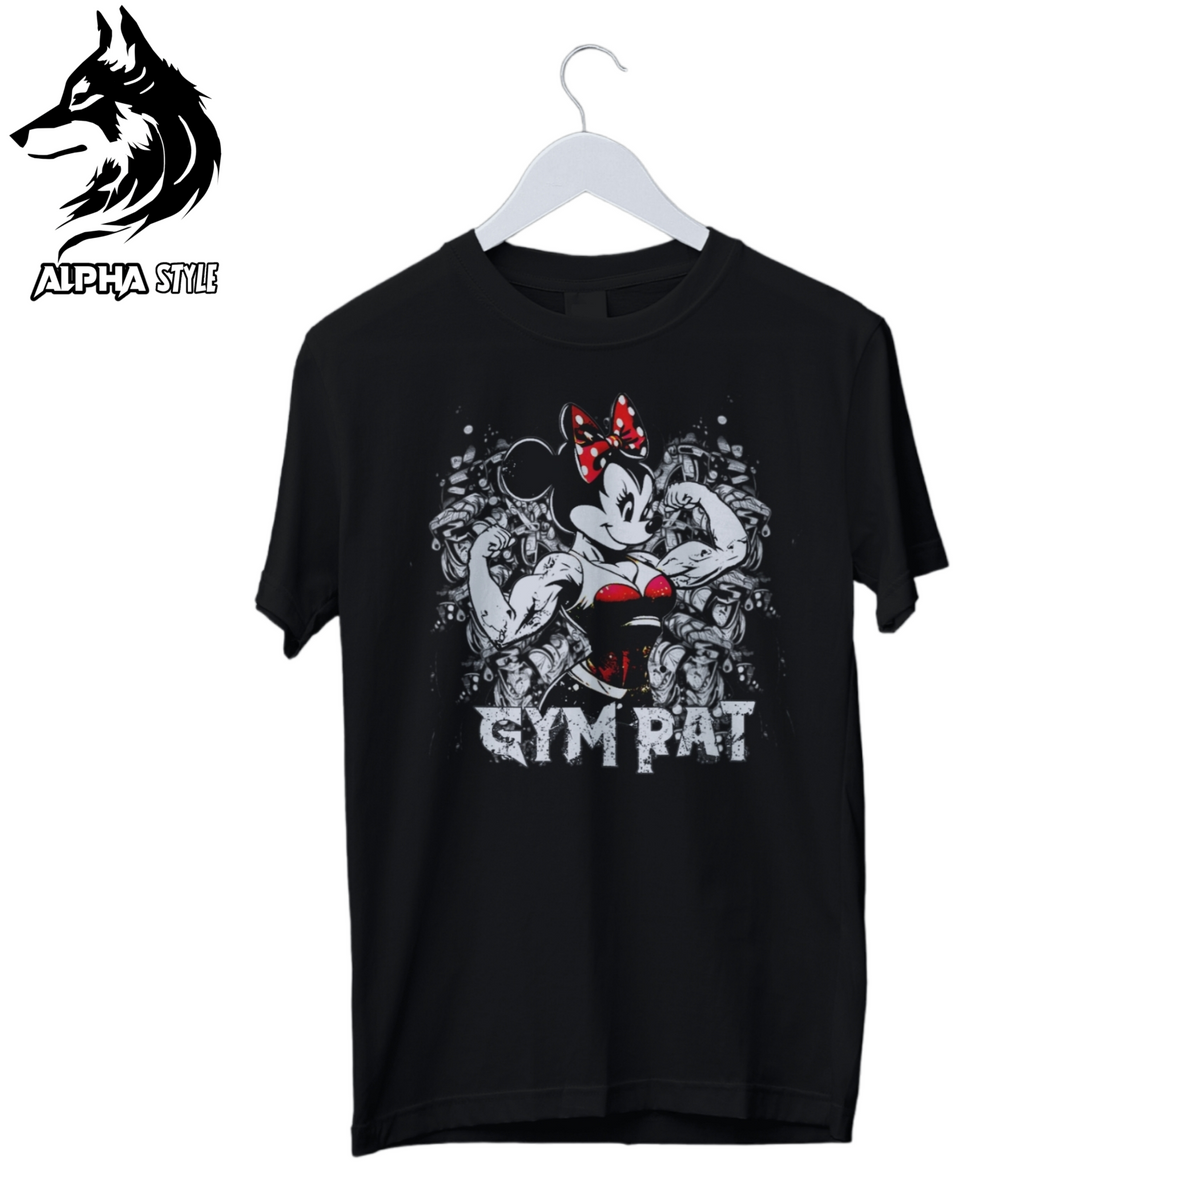 Nome do produto: Camiseta feminina GYMRAT 